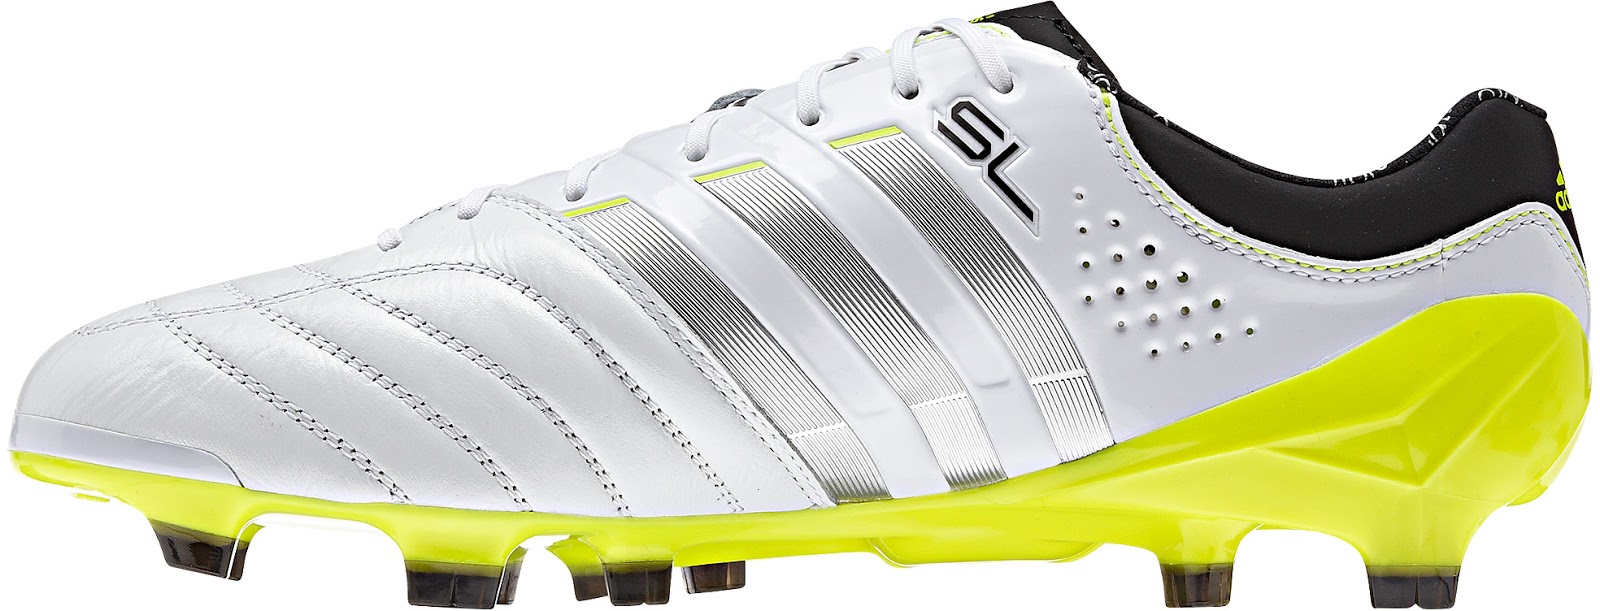 Adidas Adipure 11pro SL Boot Released - Footy Headlines